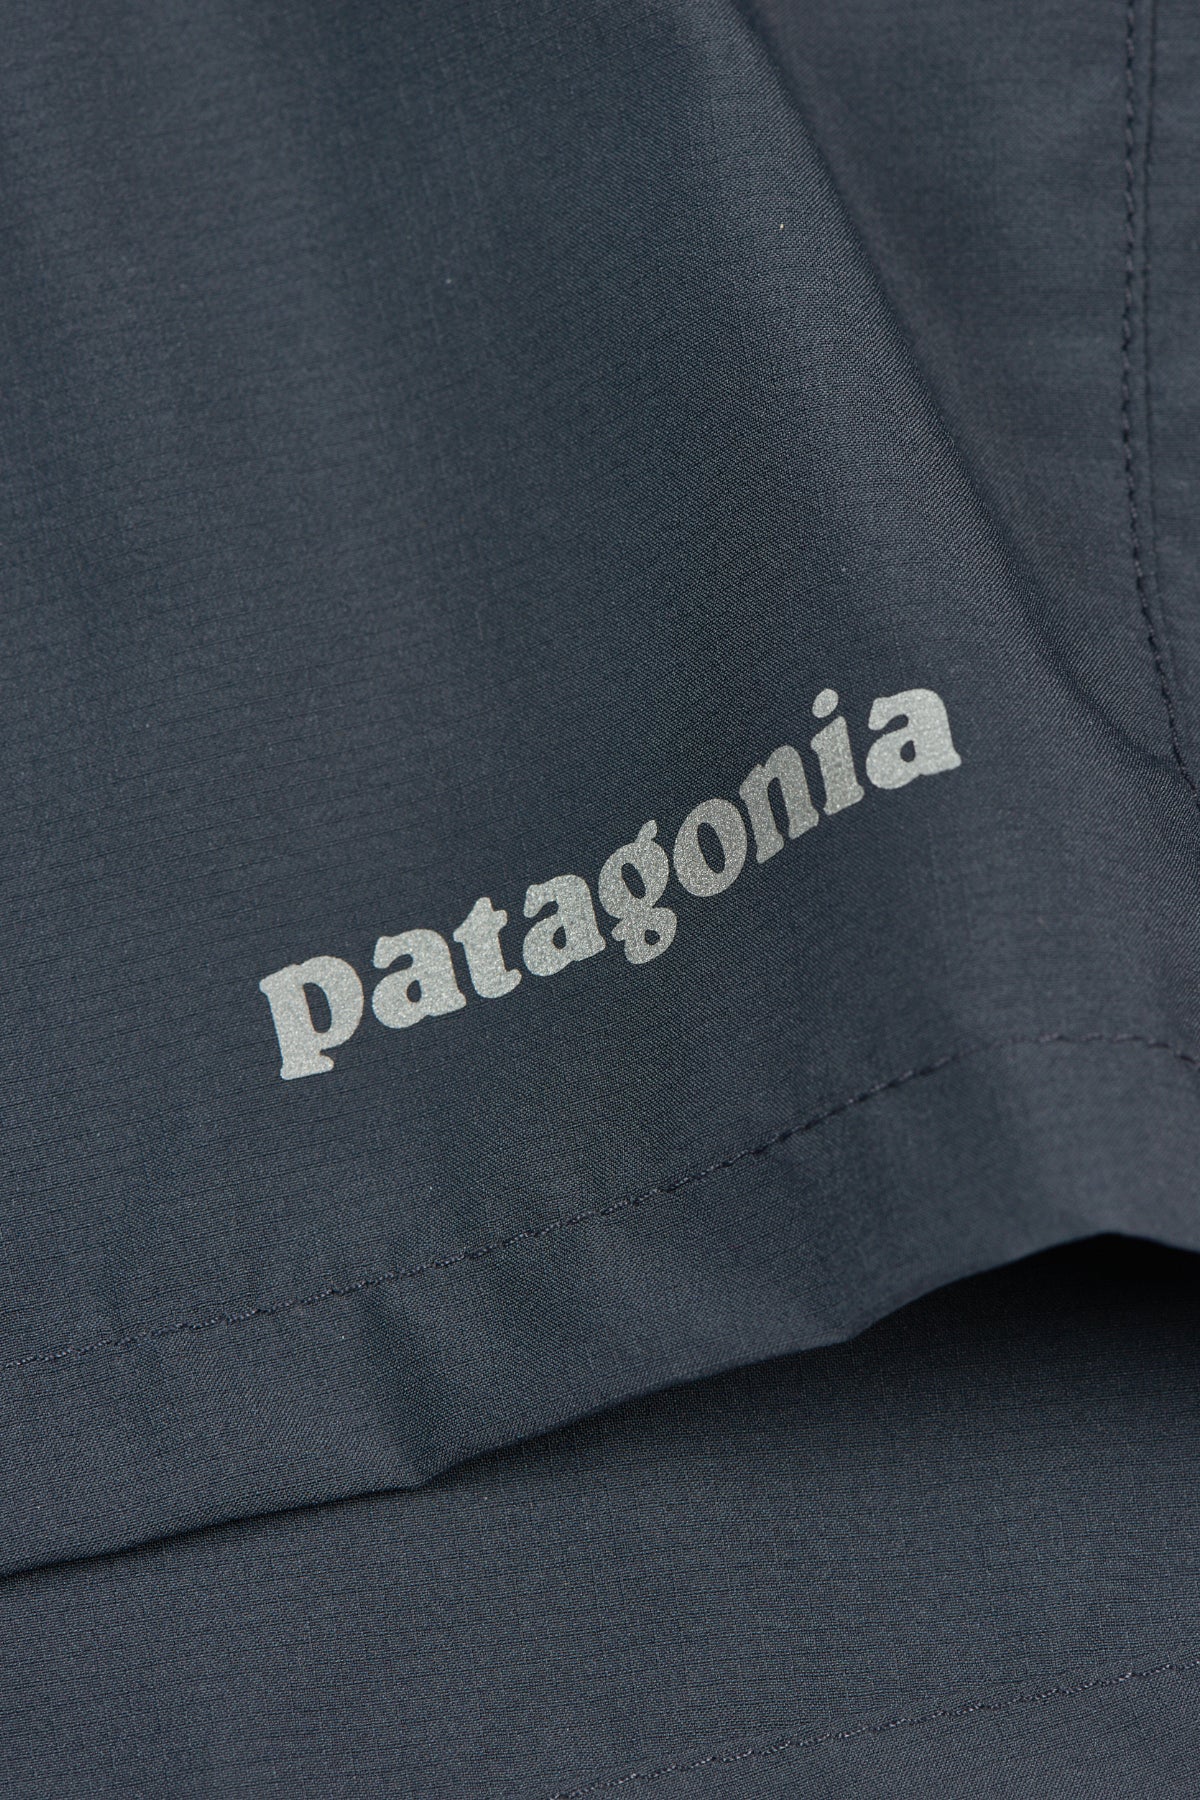 patagonia - strider pro shorts 5&quot;